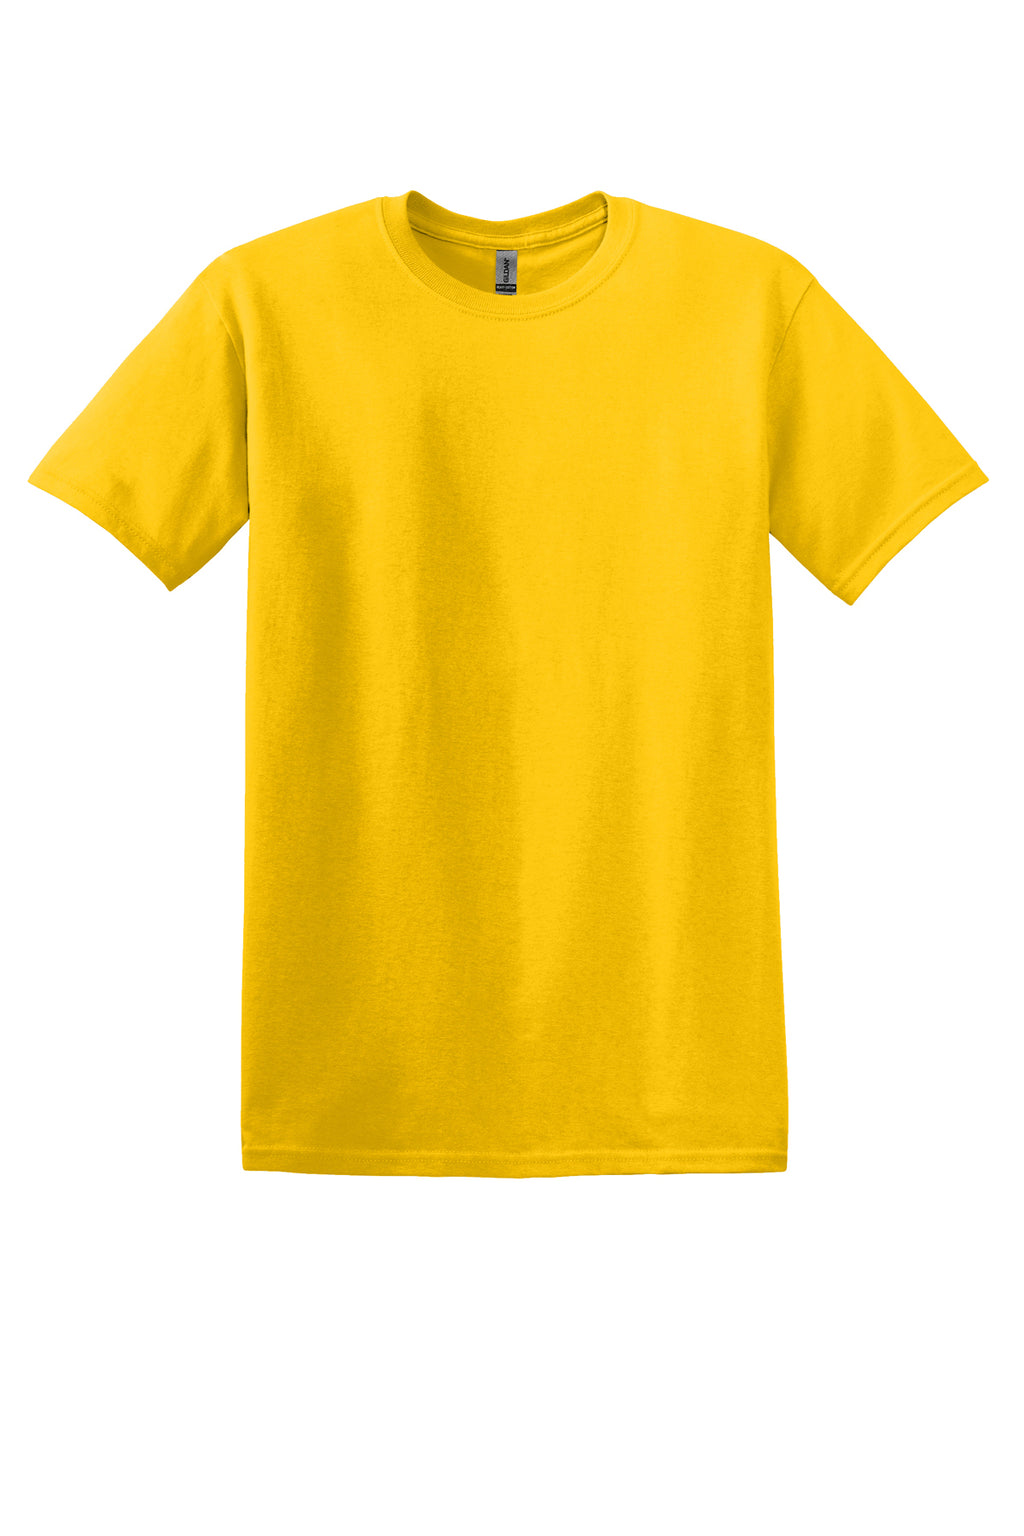 Gildan Mens/Unisex S/S Shirts Daisy